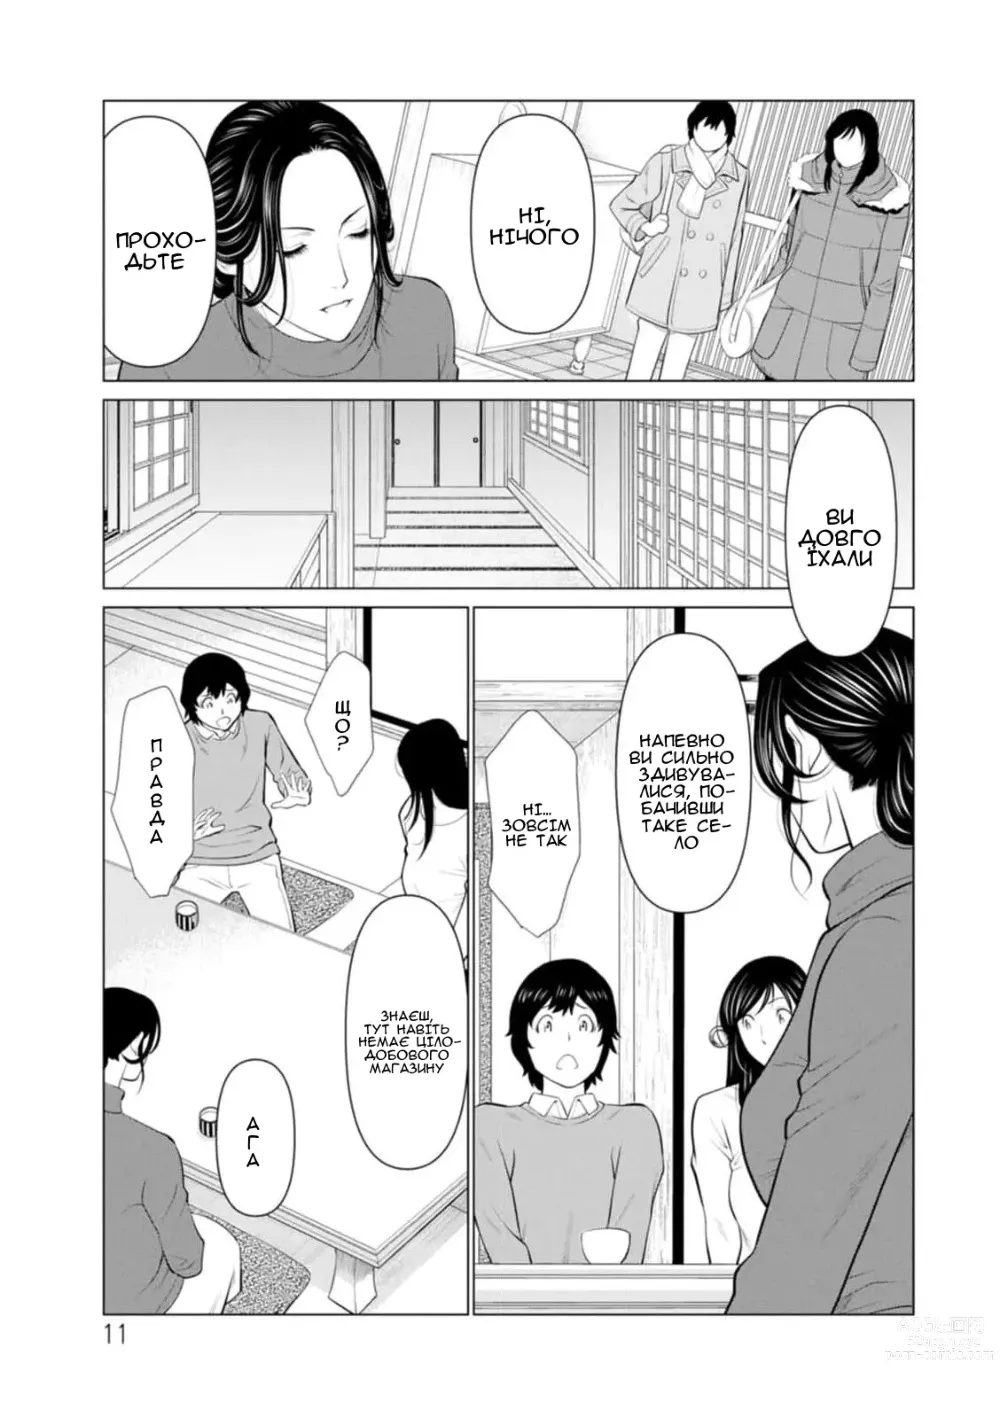 Page 9 of manga Сад чистилища 1